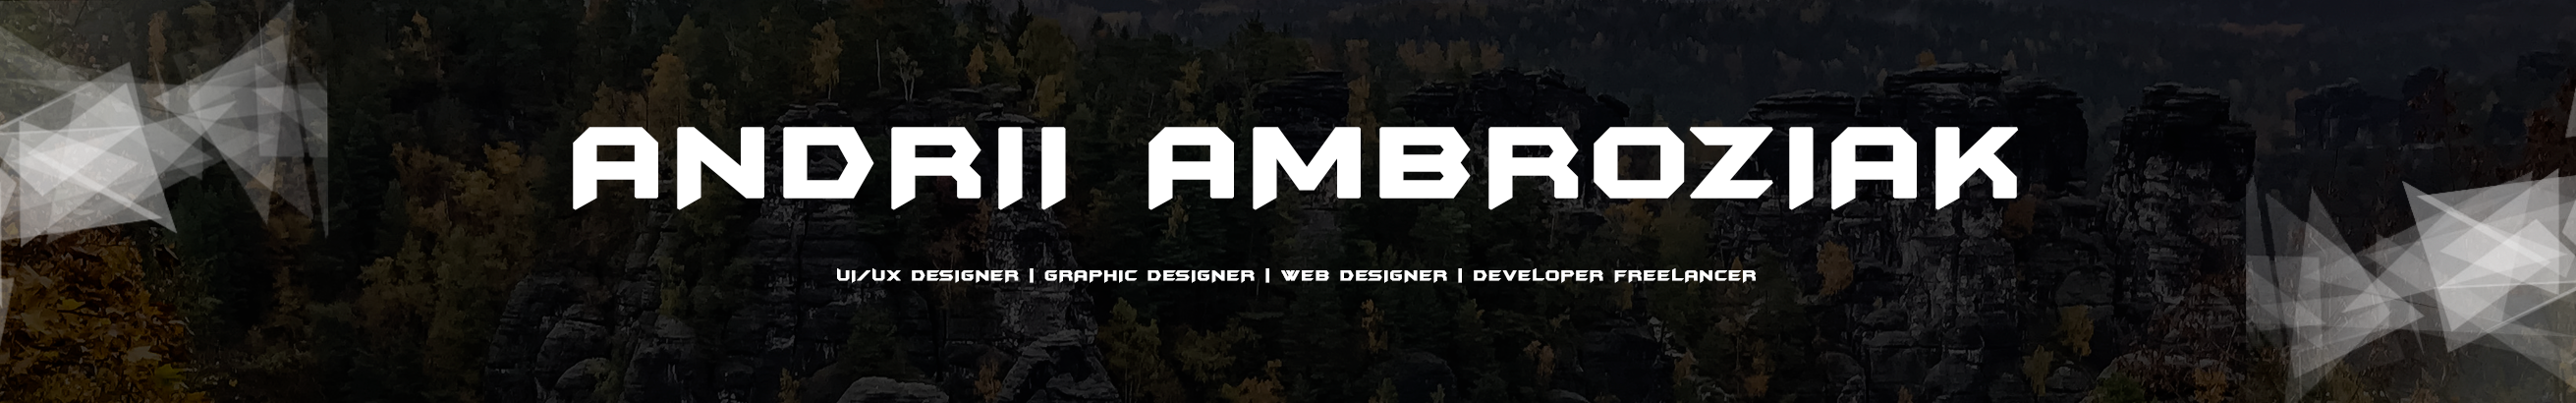 Andrii Ambroziak's profile banner